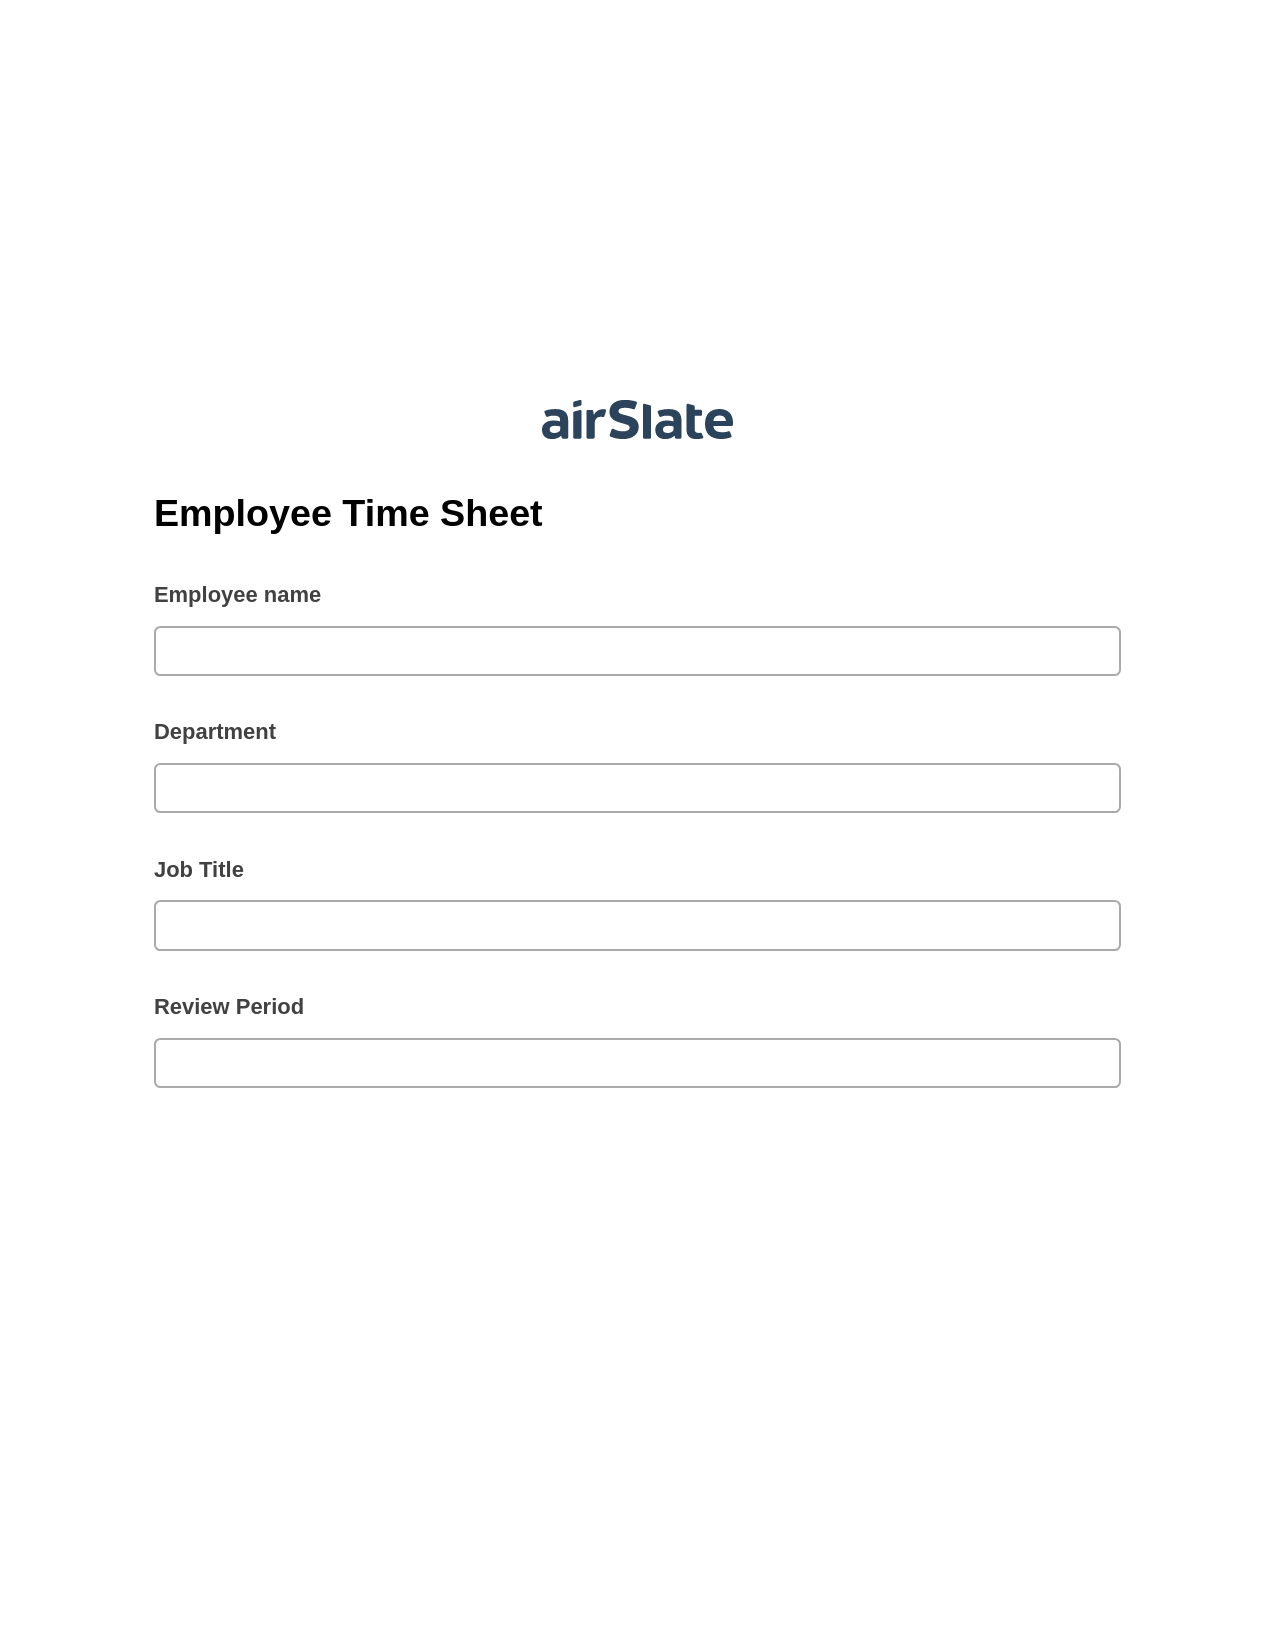 Employee Time Sheet Pre-fill from Salesforce Records Bot, Create Salesforce Records Bot, Export to NetSuite Bot